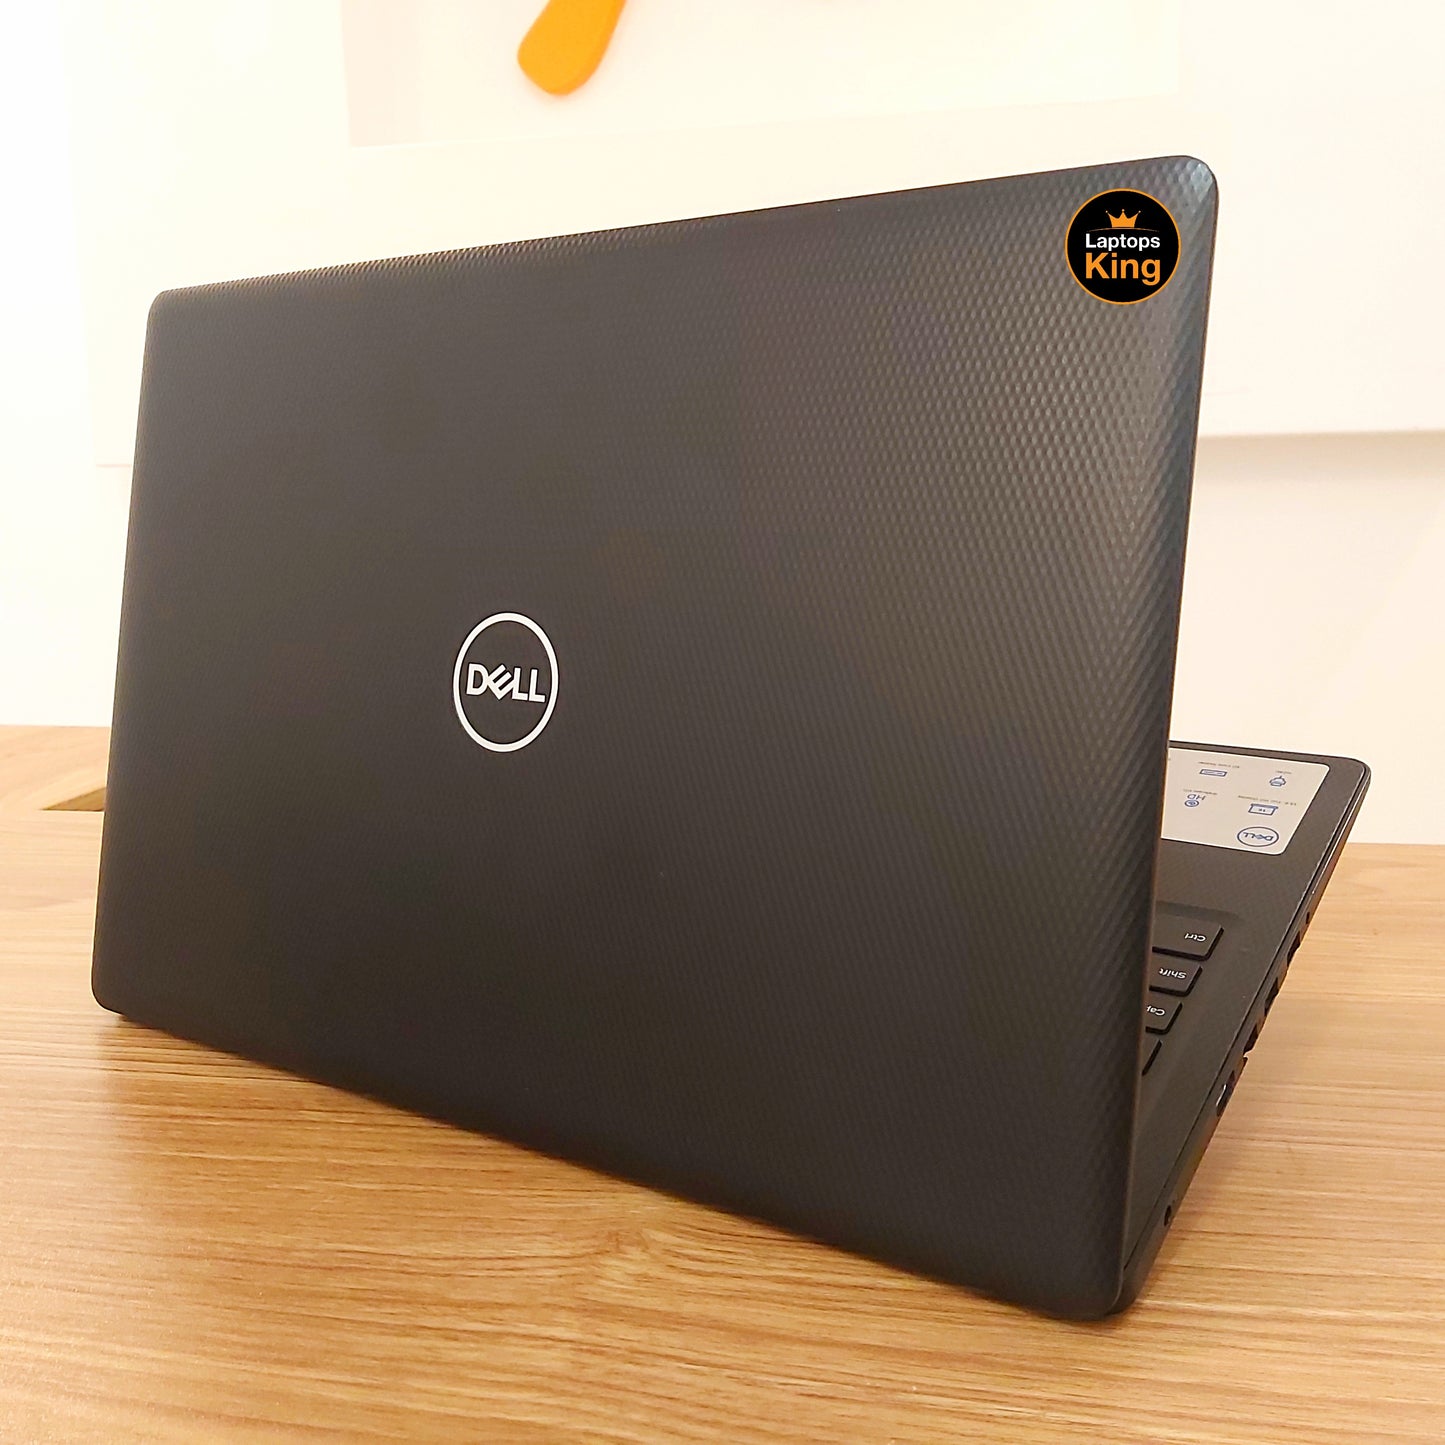 Dell Inspiron 3580 i7-8565u Radeon 520 2gb Laptop (Used Just Like New)